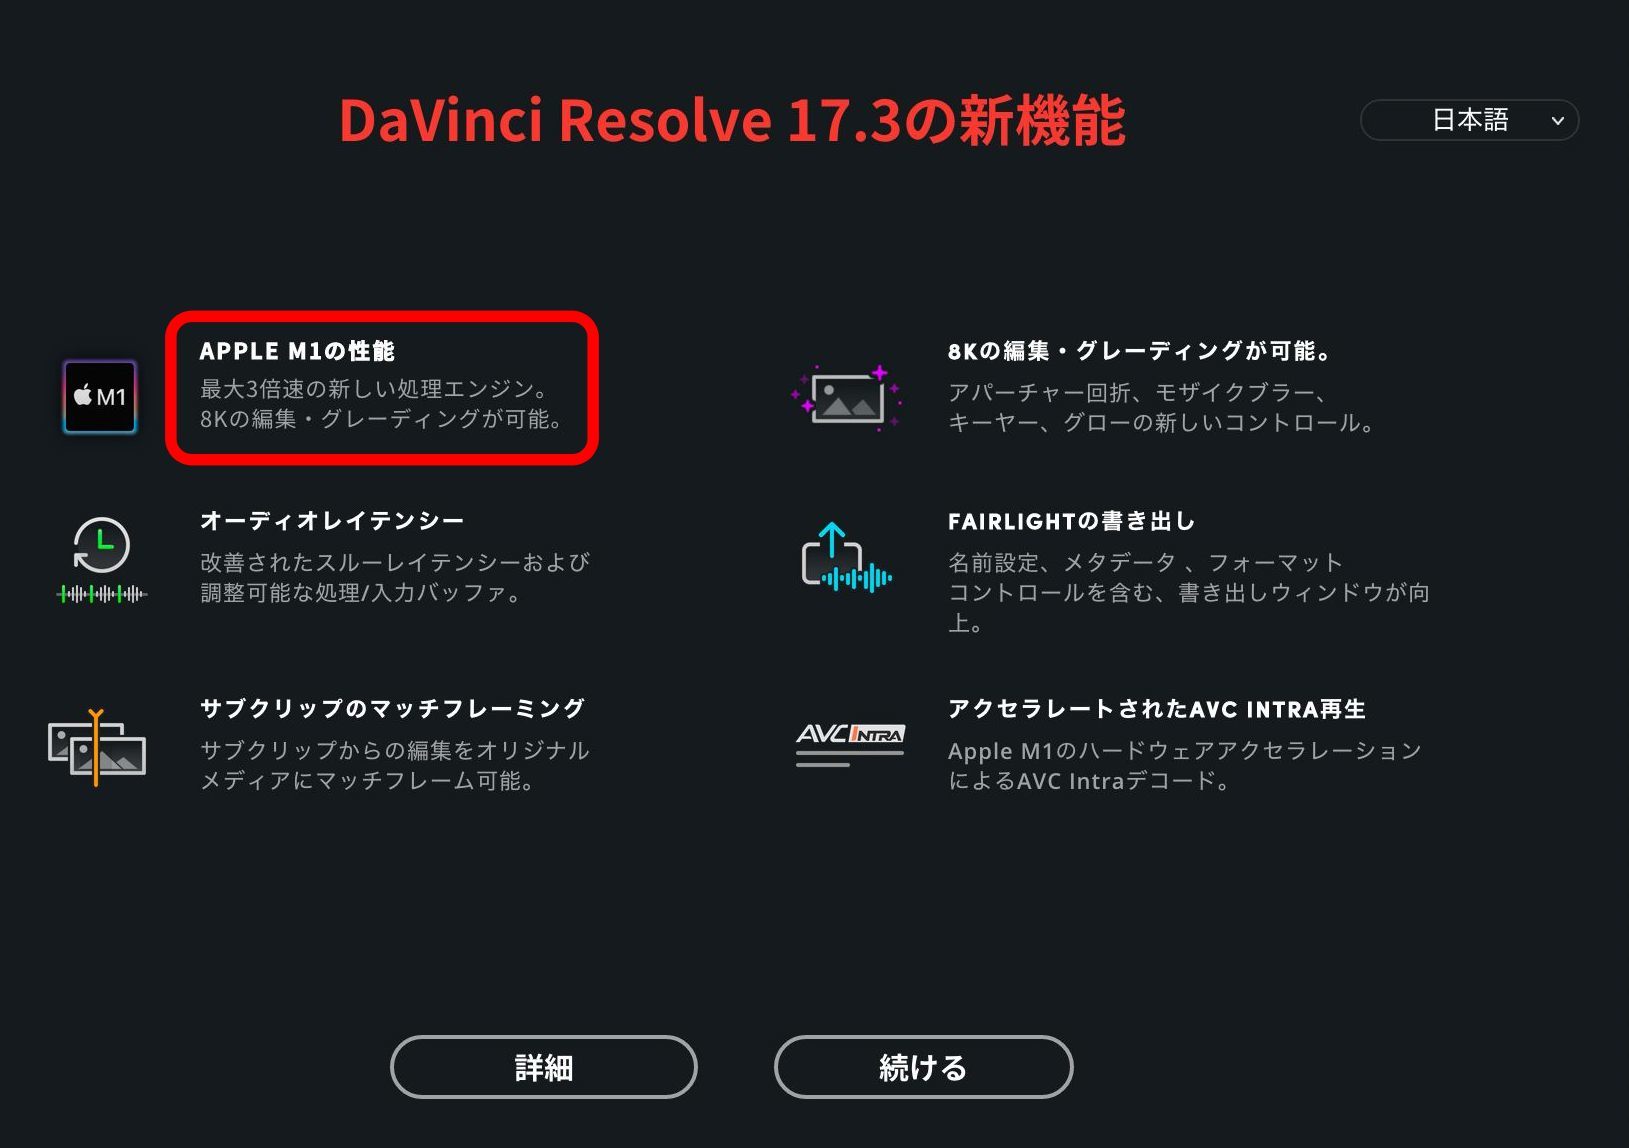 davinci resolve 17.3 crack